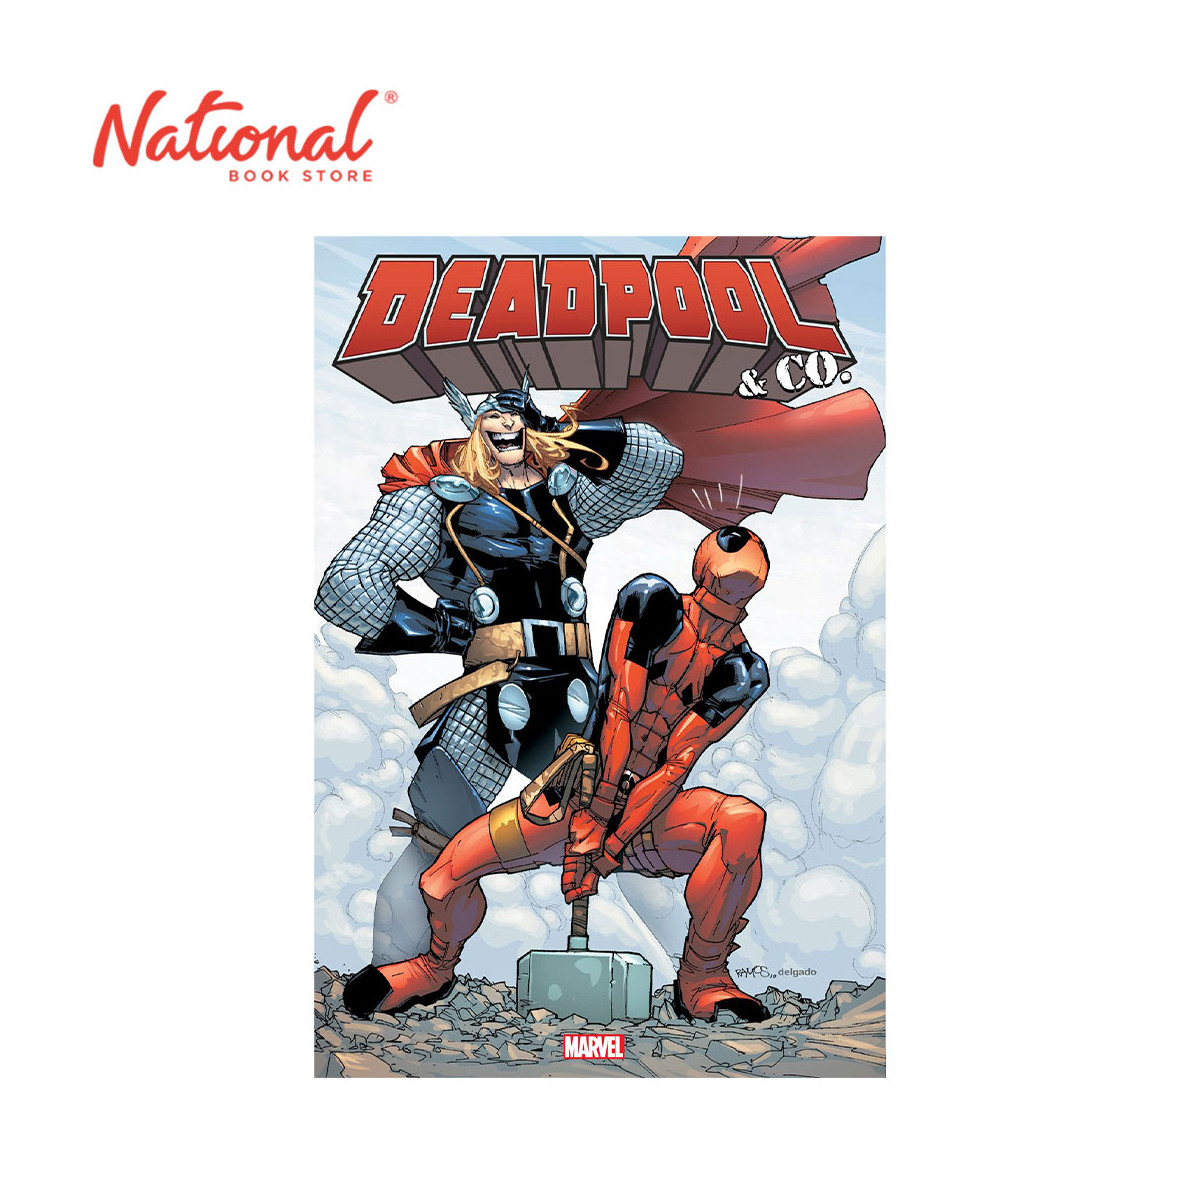 Deadpool & Co. Omnibus by Victor Gischler - Hardcover - Graphic Novels - Comics